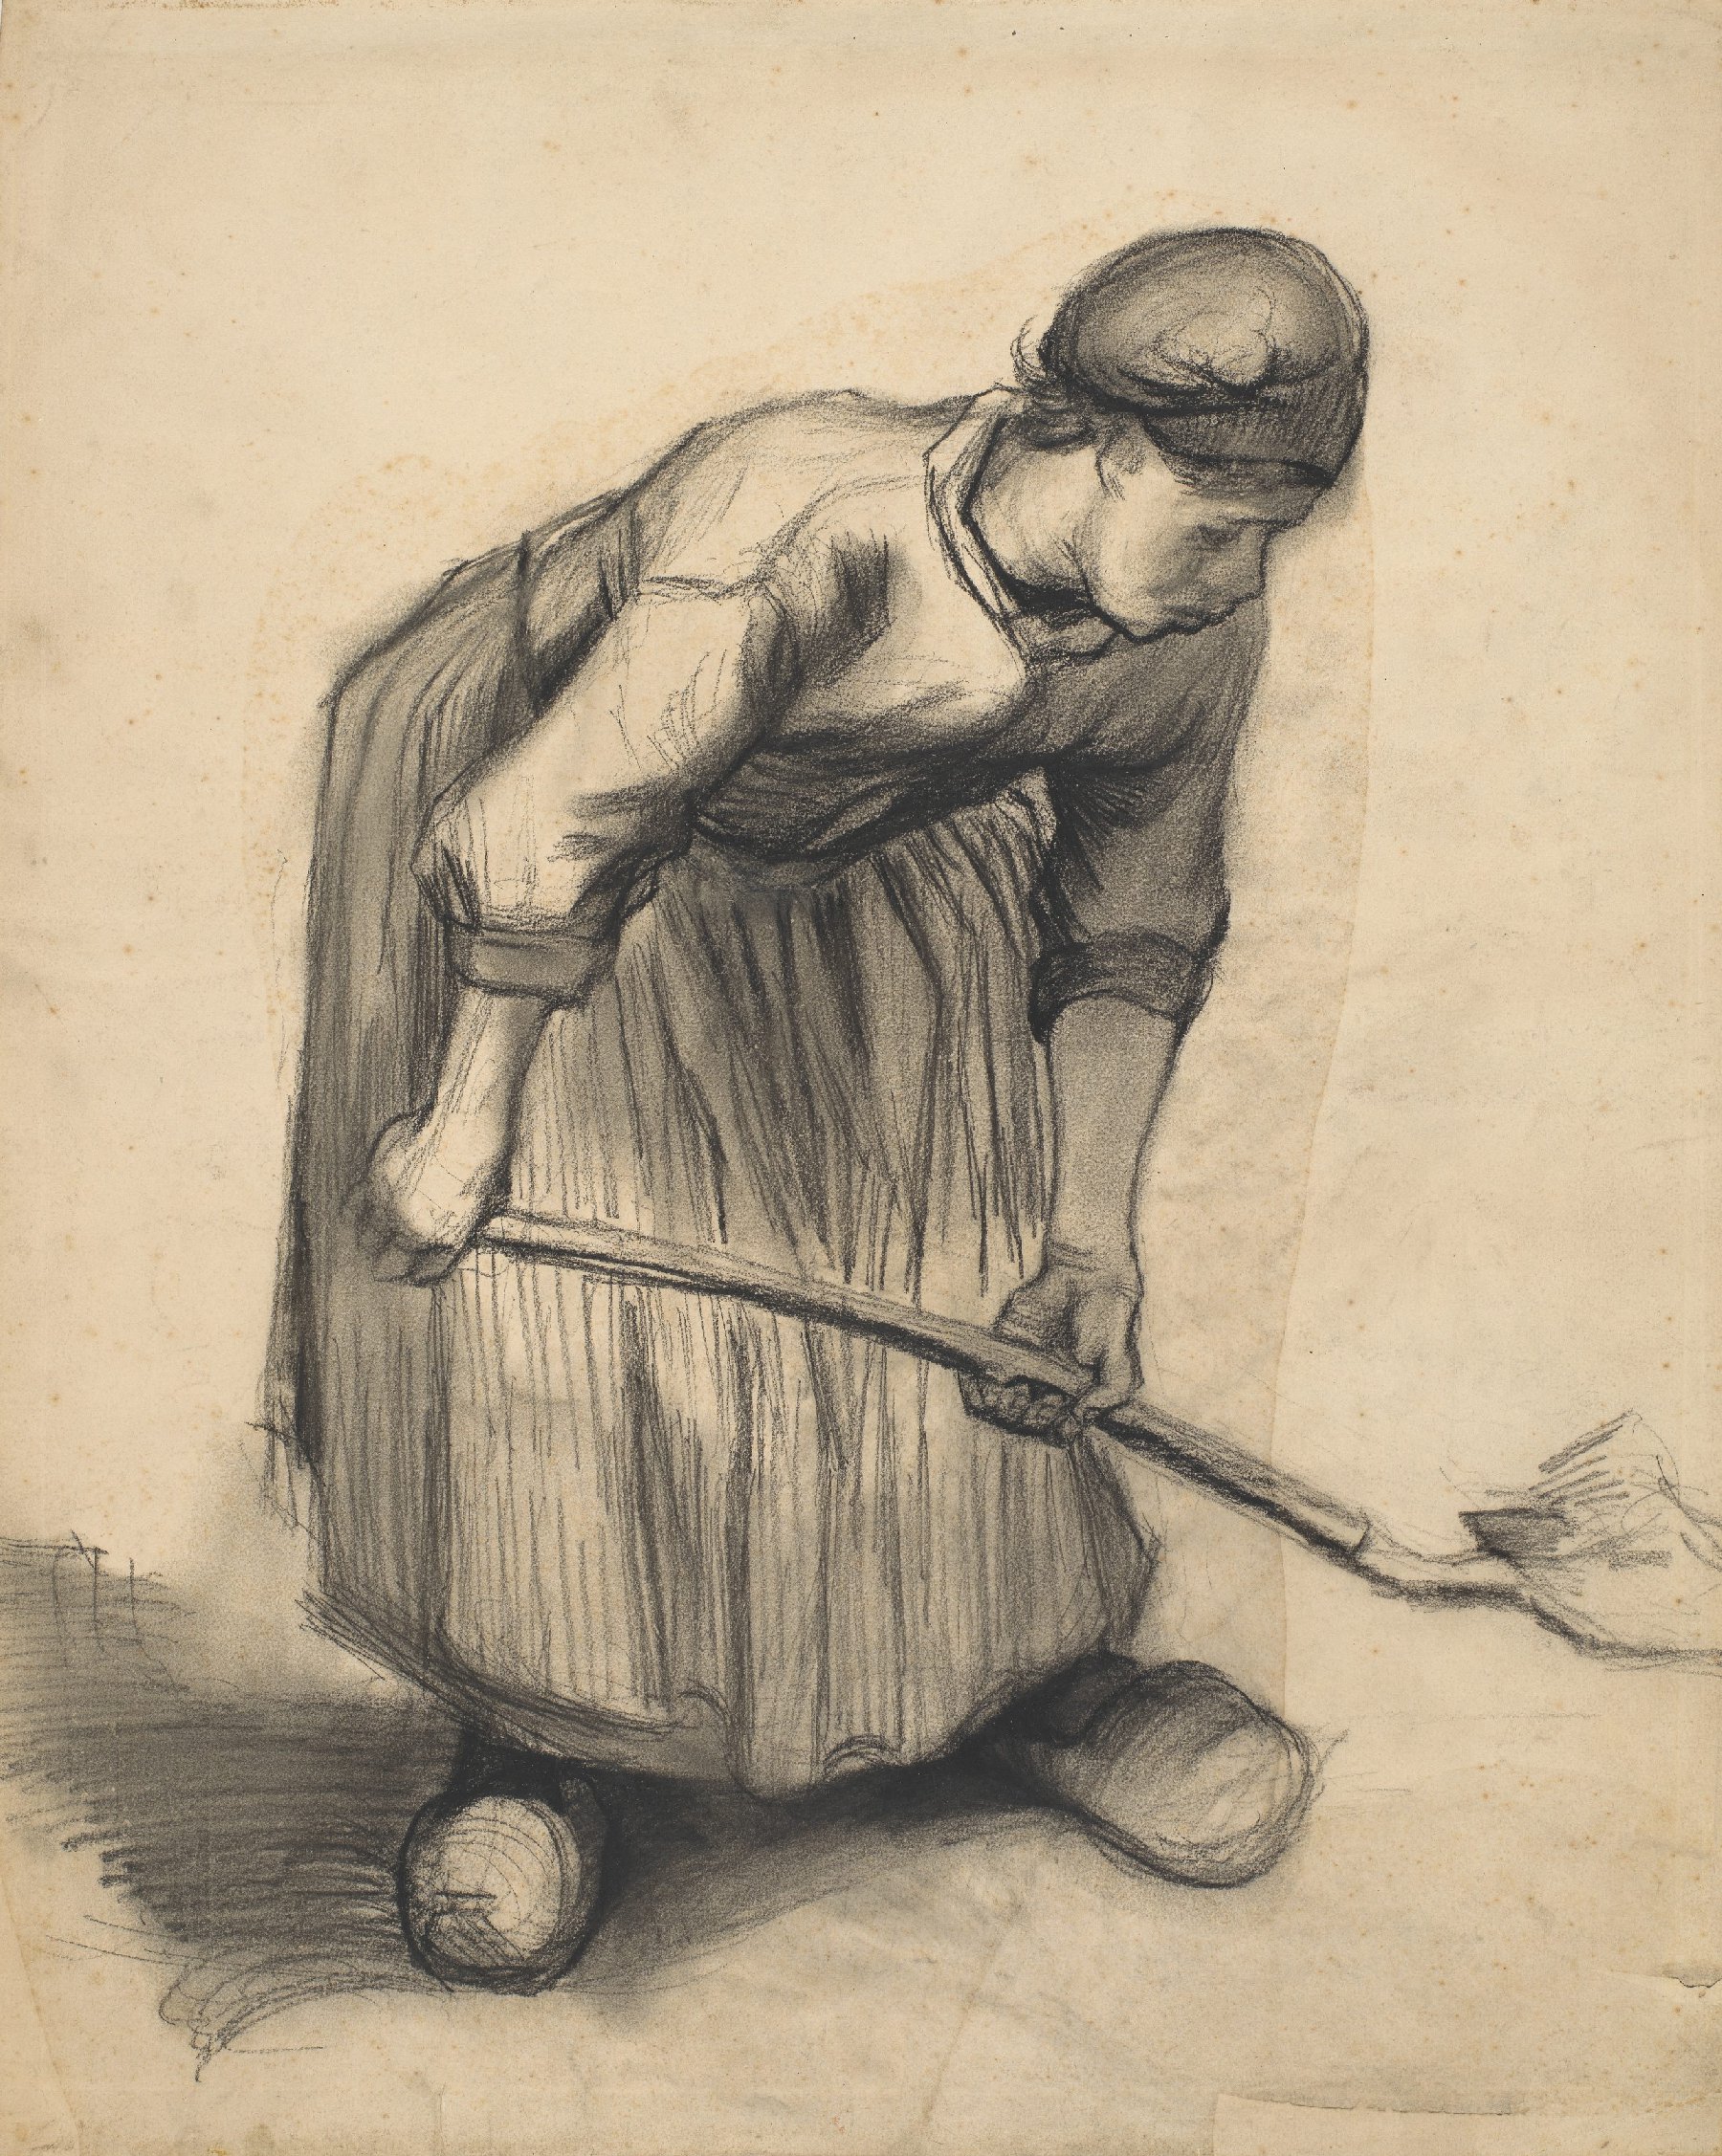 Spittende boerin Vincent van Gogh (1853 - 1890), Nuenen, juli-september 1885